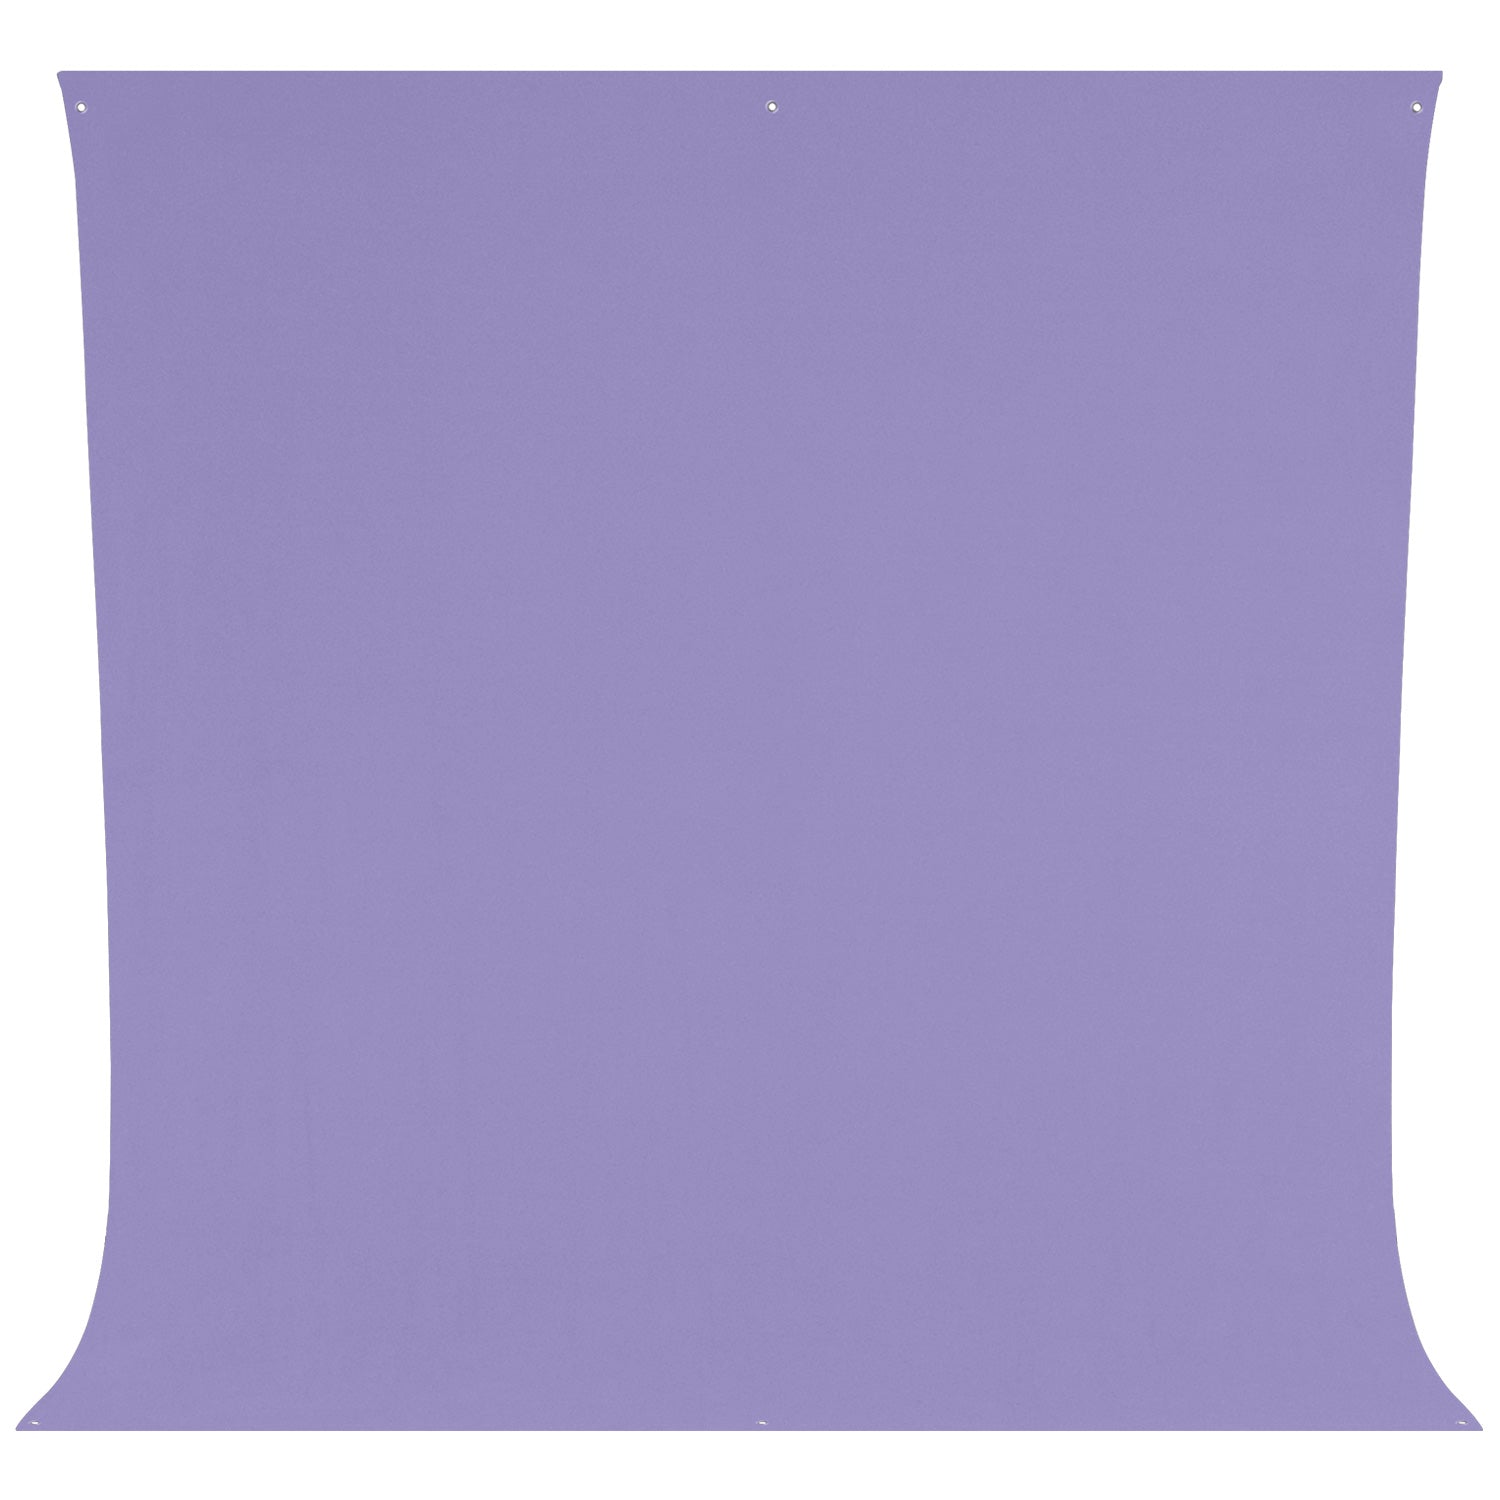 Wrinkle-Resistant Backdrop - Periwinkle Purple (9' x 10')